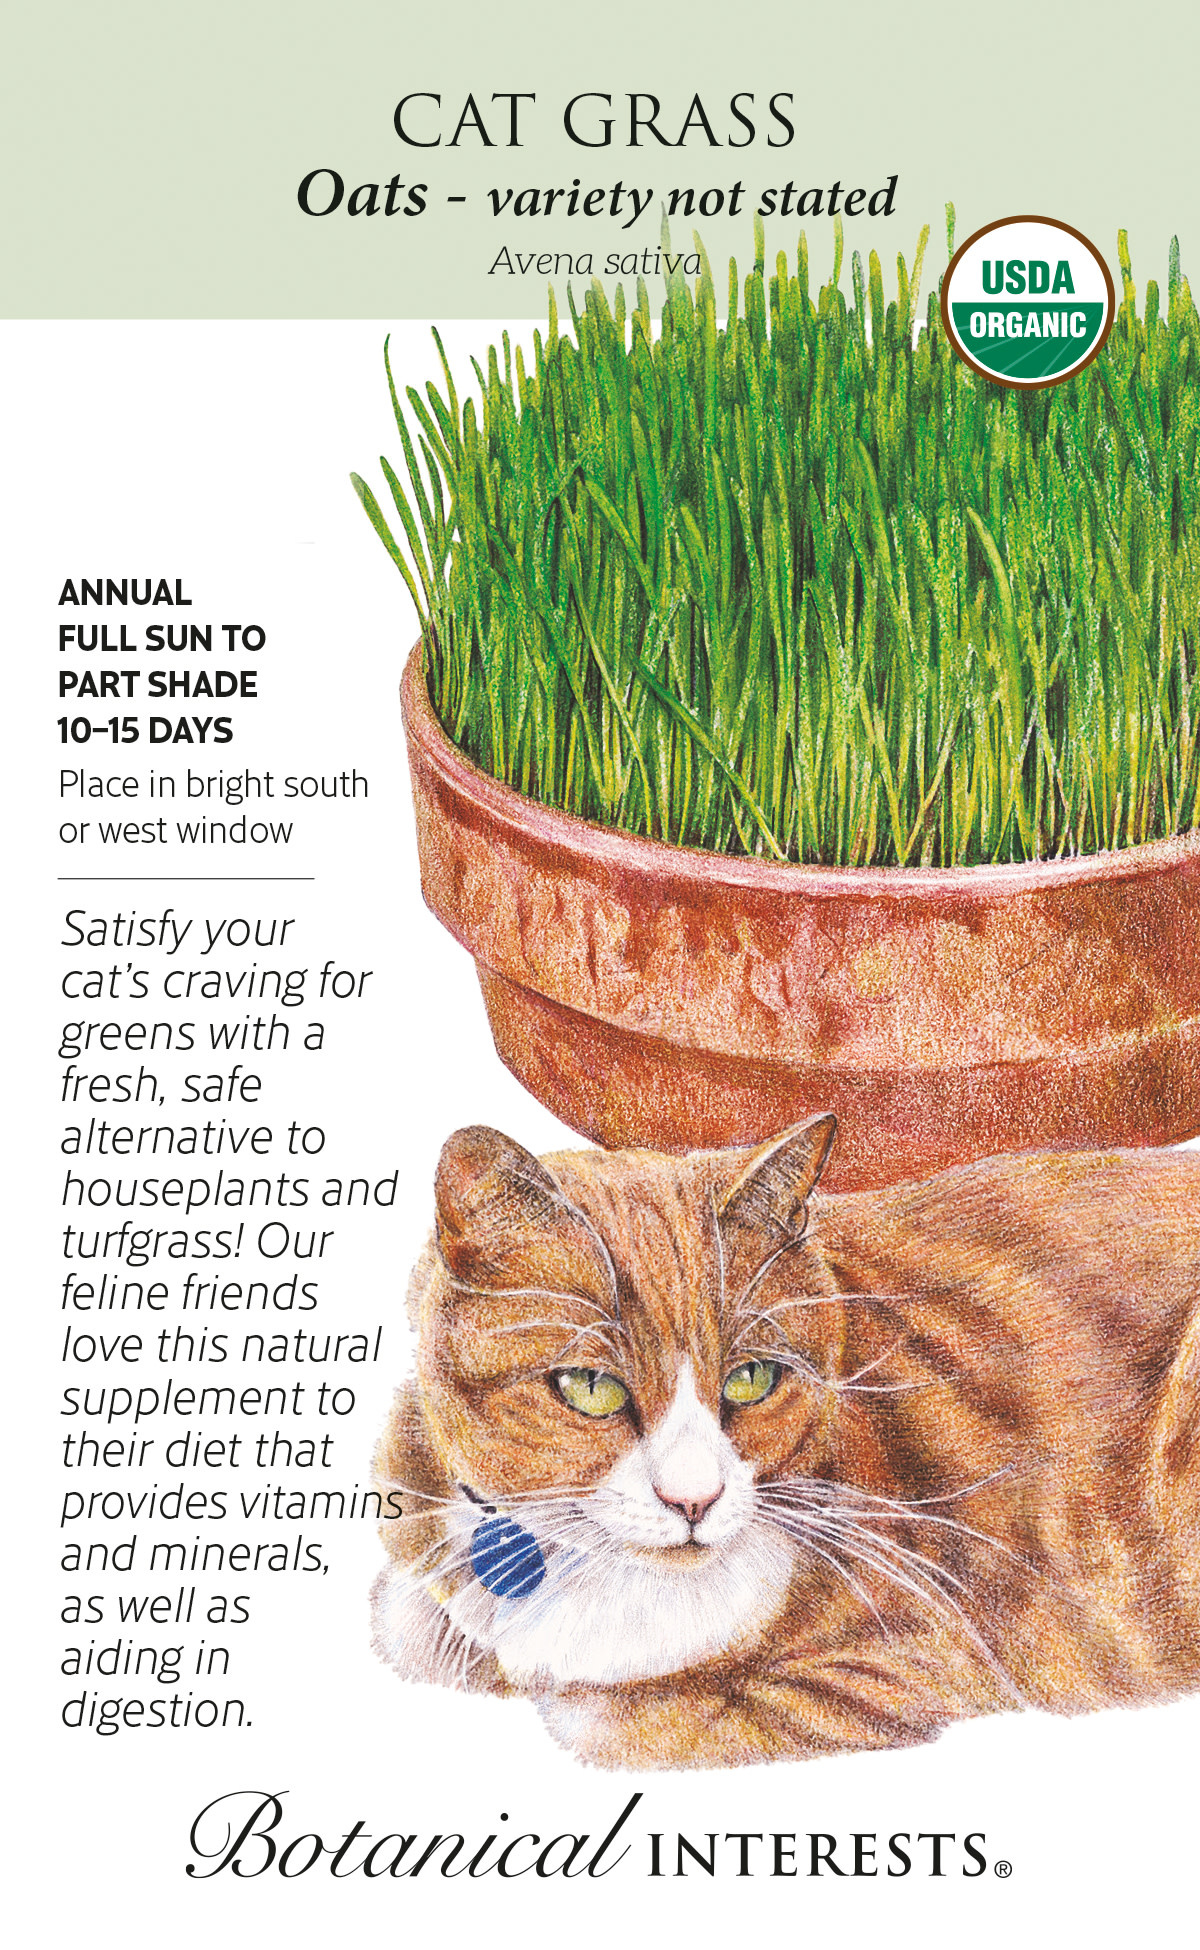 Seed Cat Grass Mix Organic -Avena sativa, Triticum aestivum, Hordeum vulgare - Lrg Pkt